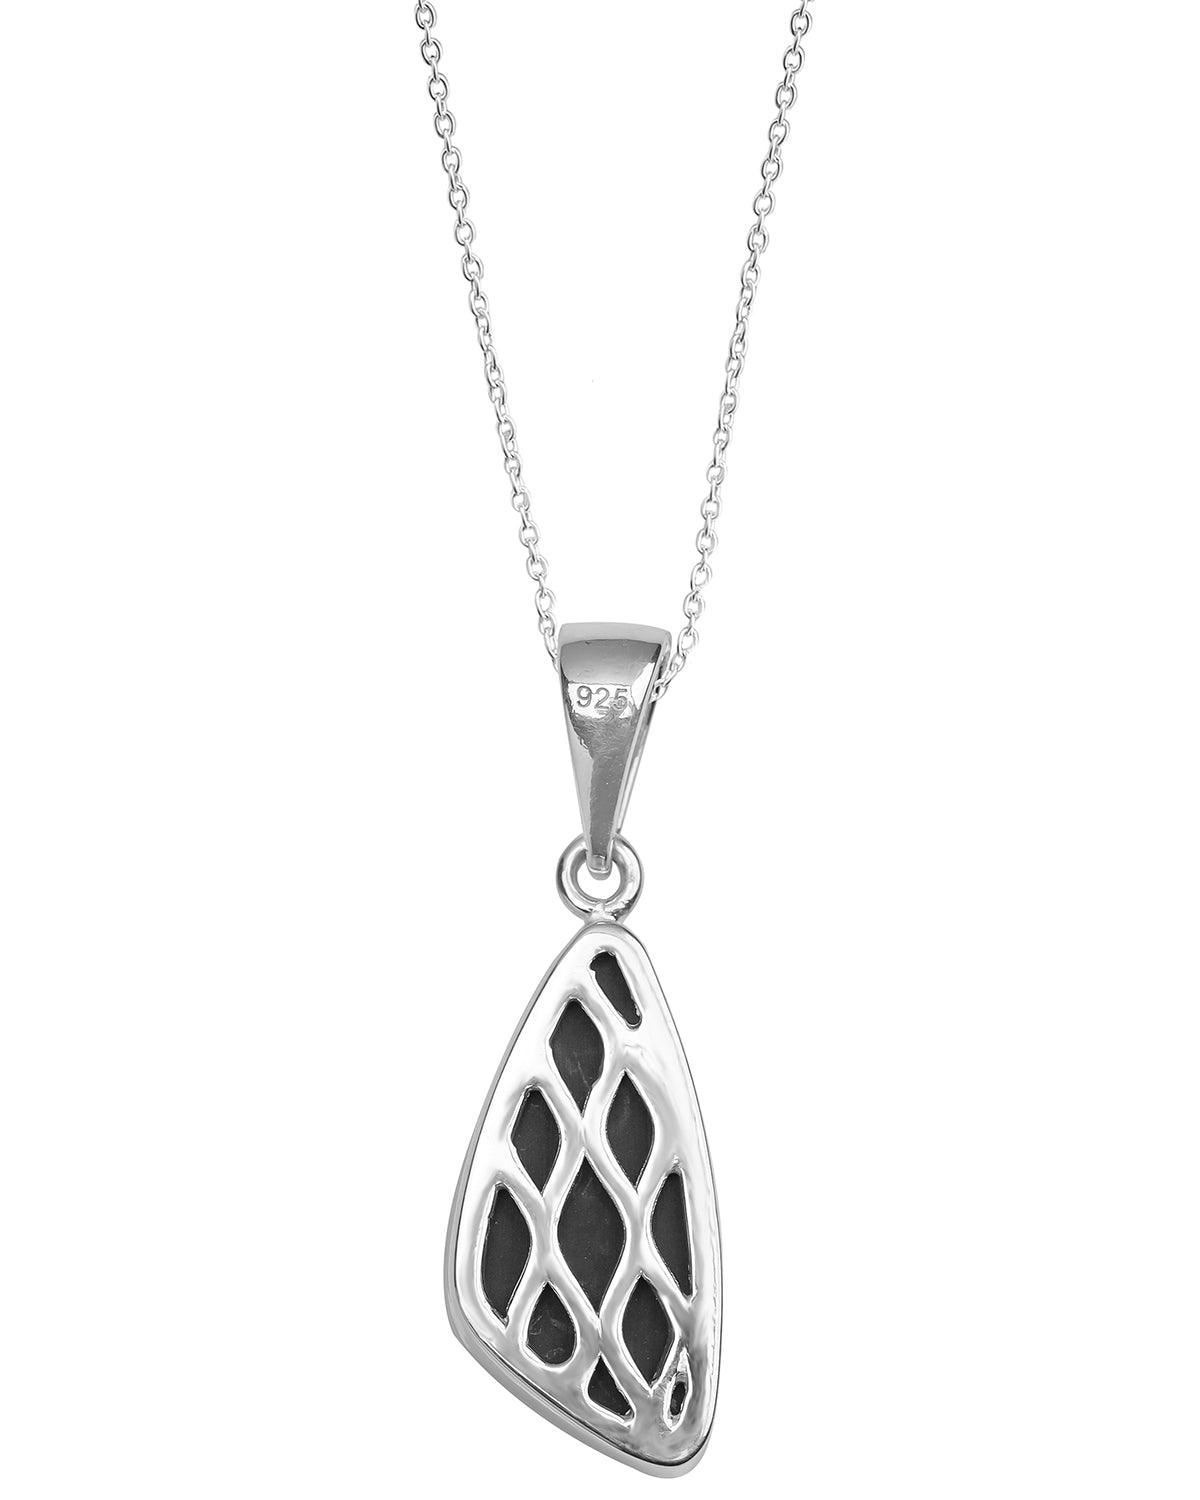 8.45 Ct. Ammolite 925 Sterling Silver Necklace Pendant Jewelry - YoTreasure